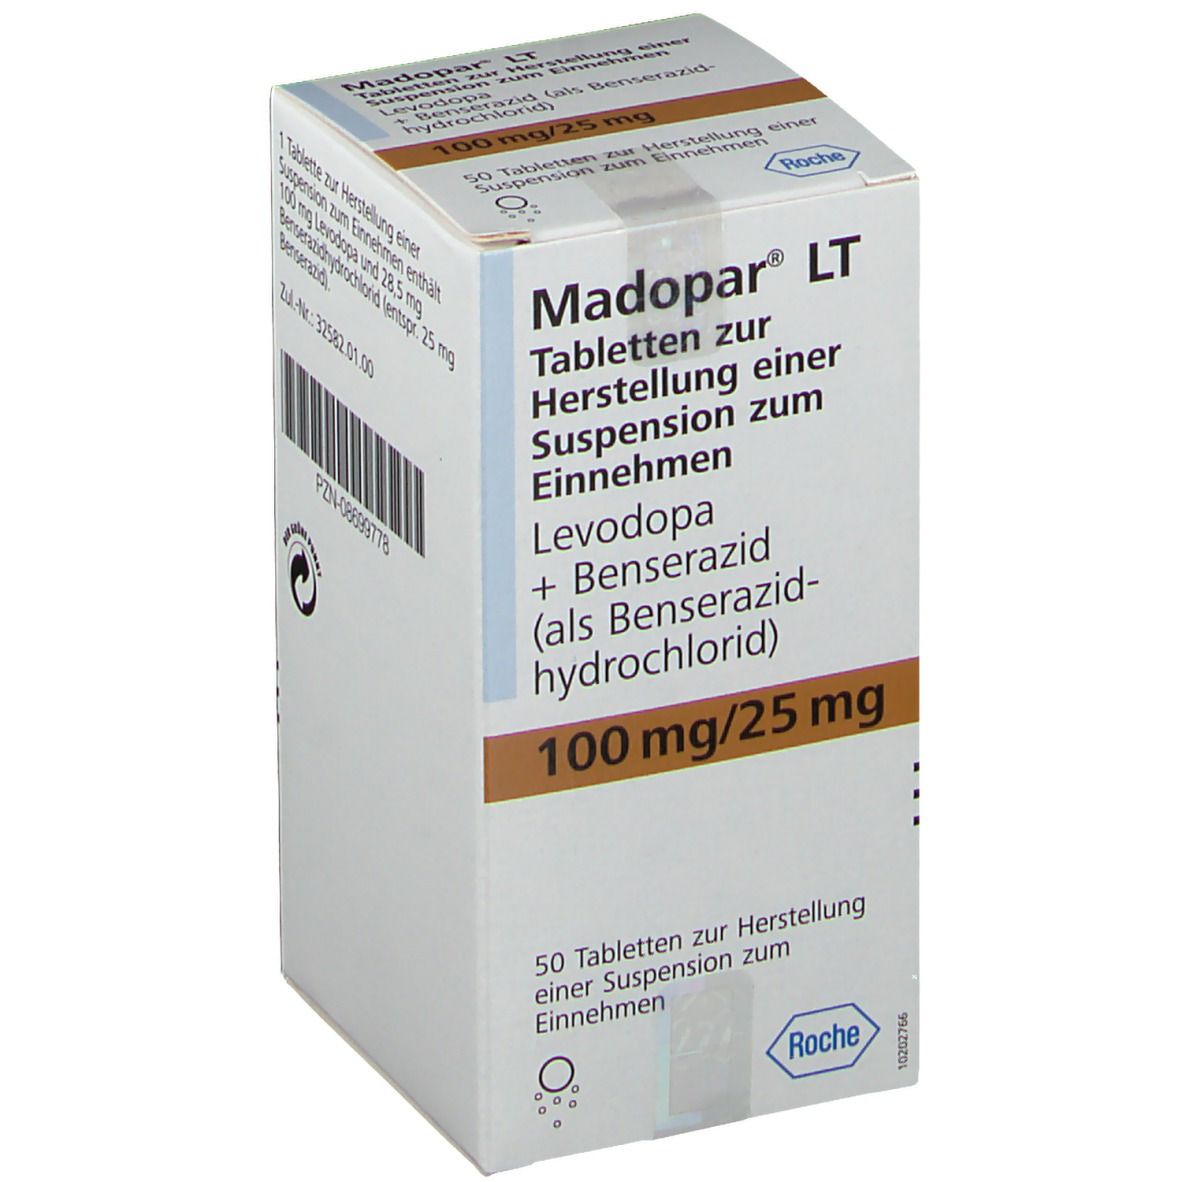 Madopar® LT